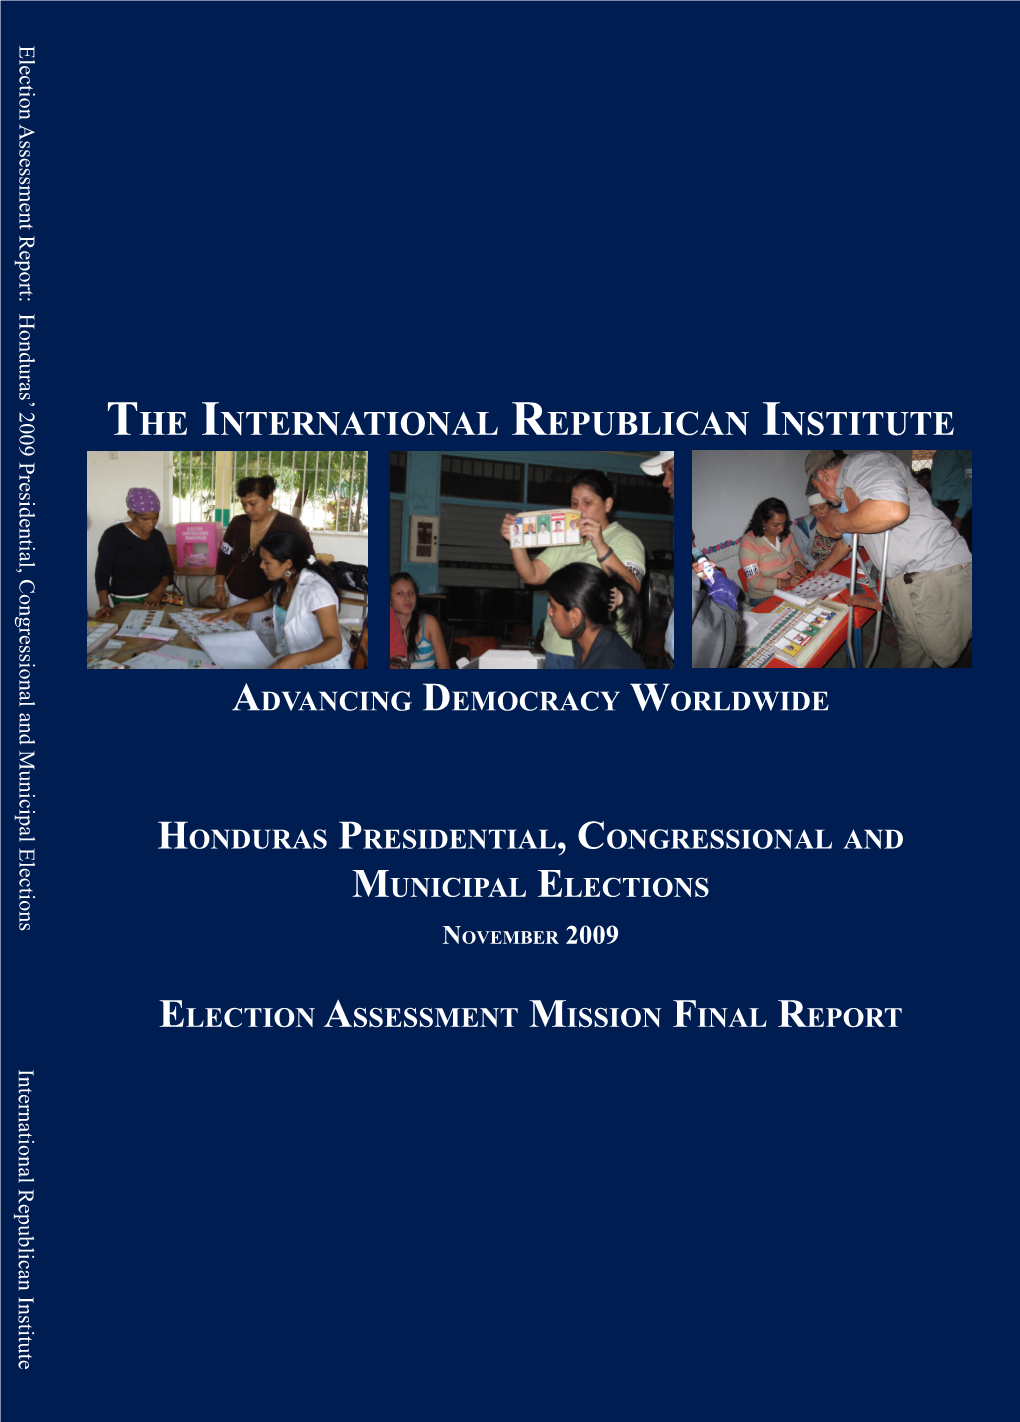 Honduras Presidential, Congressional and Municipal Elections November 29, 2009